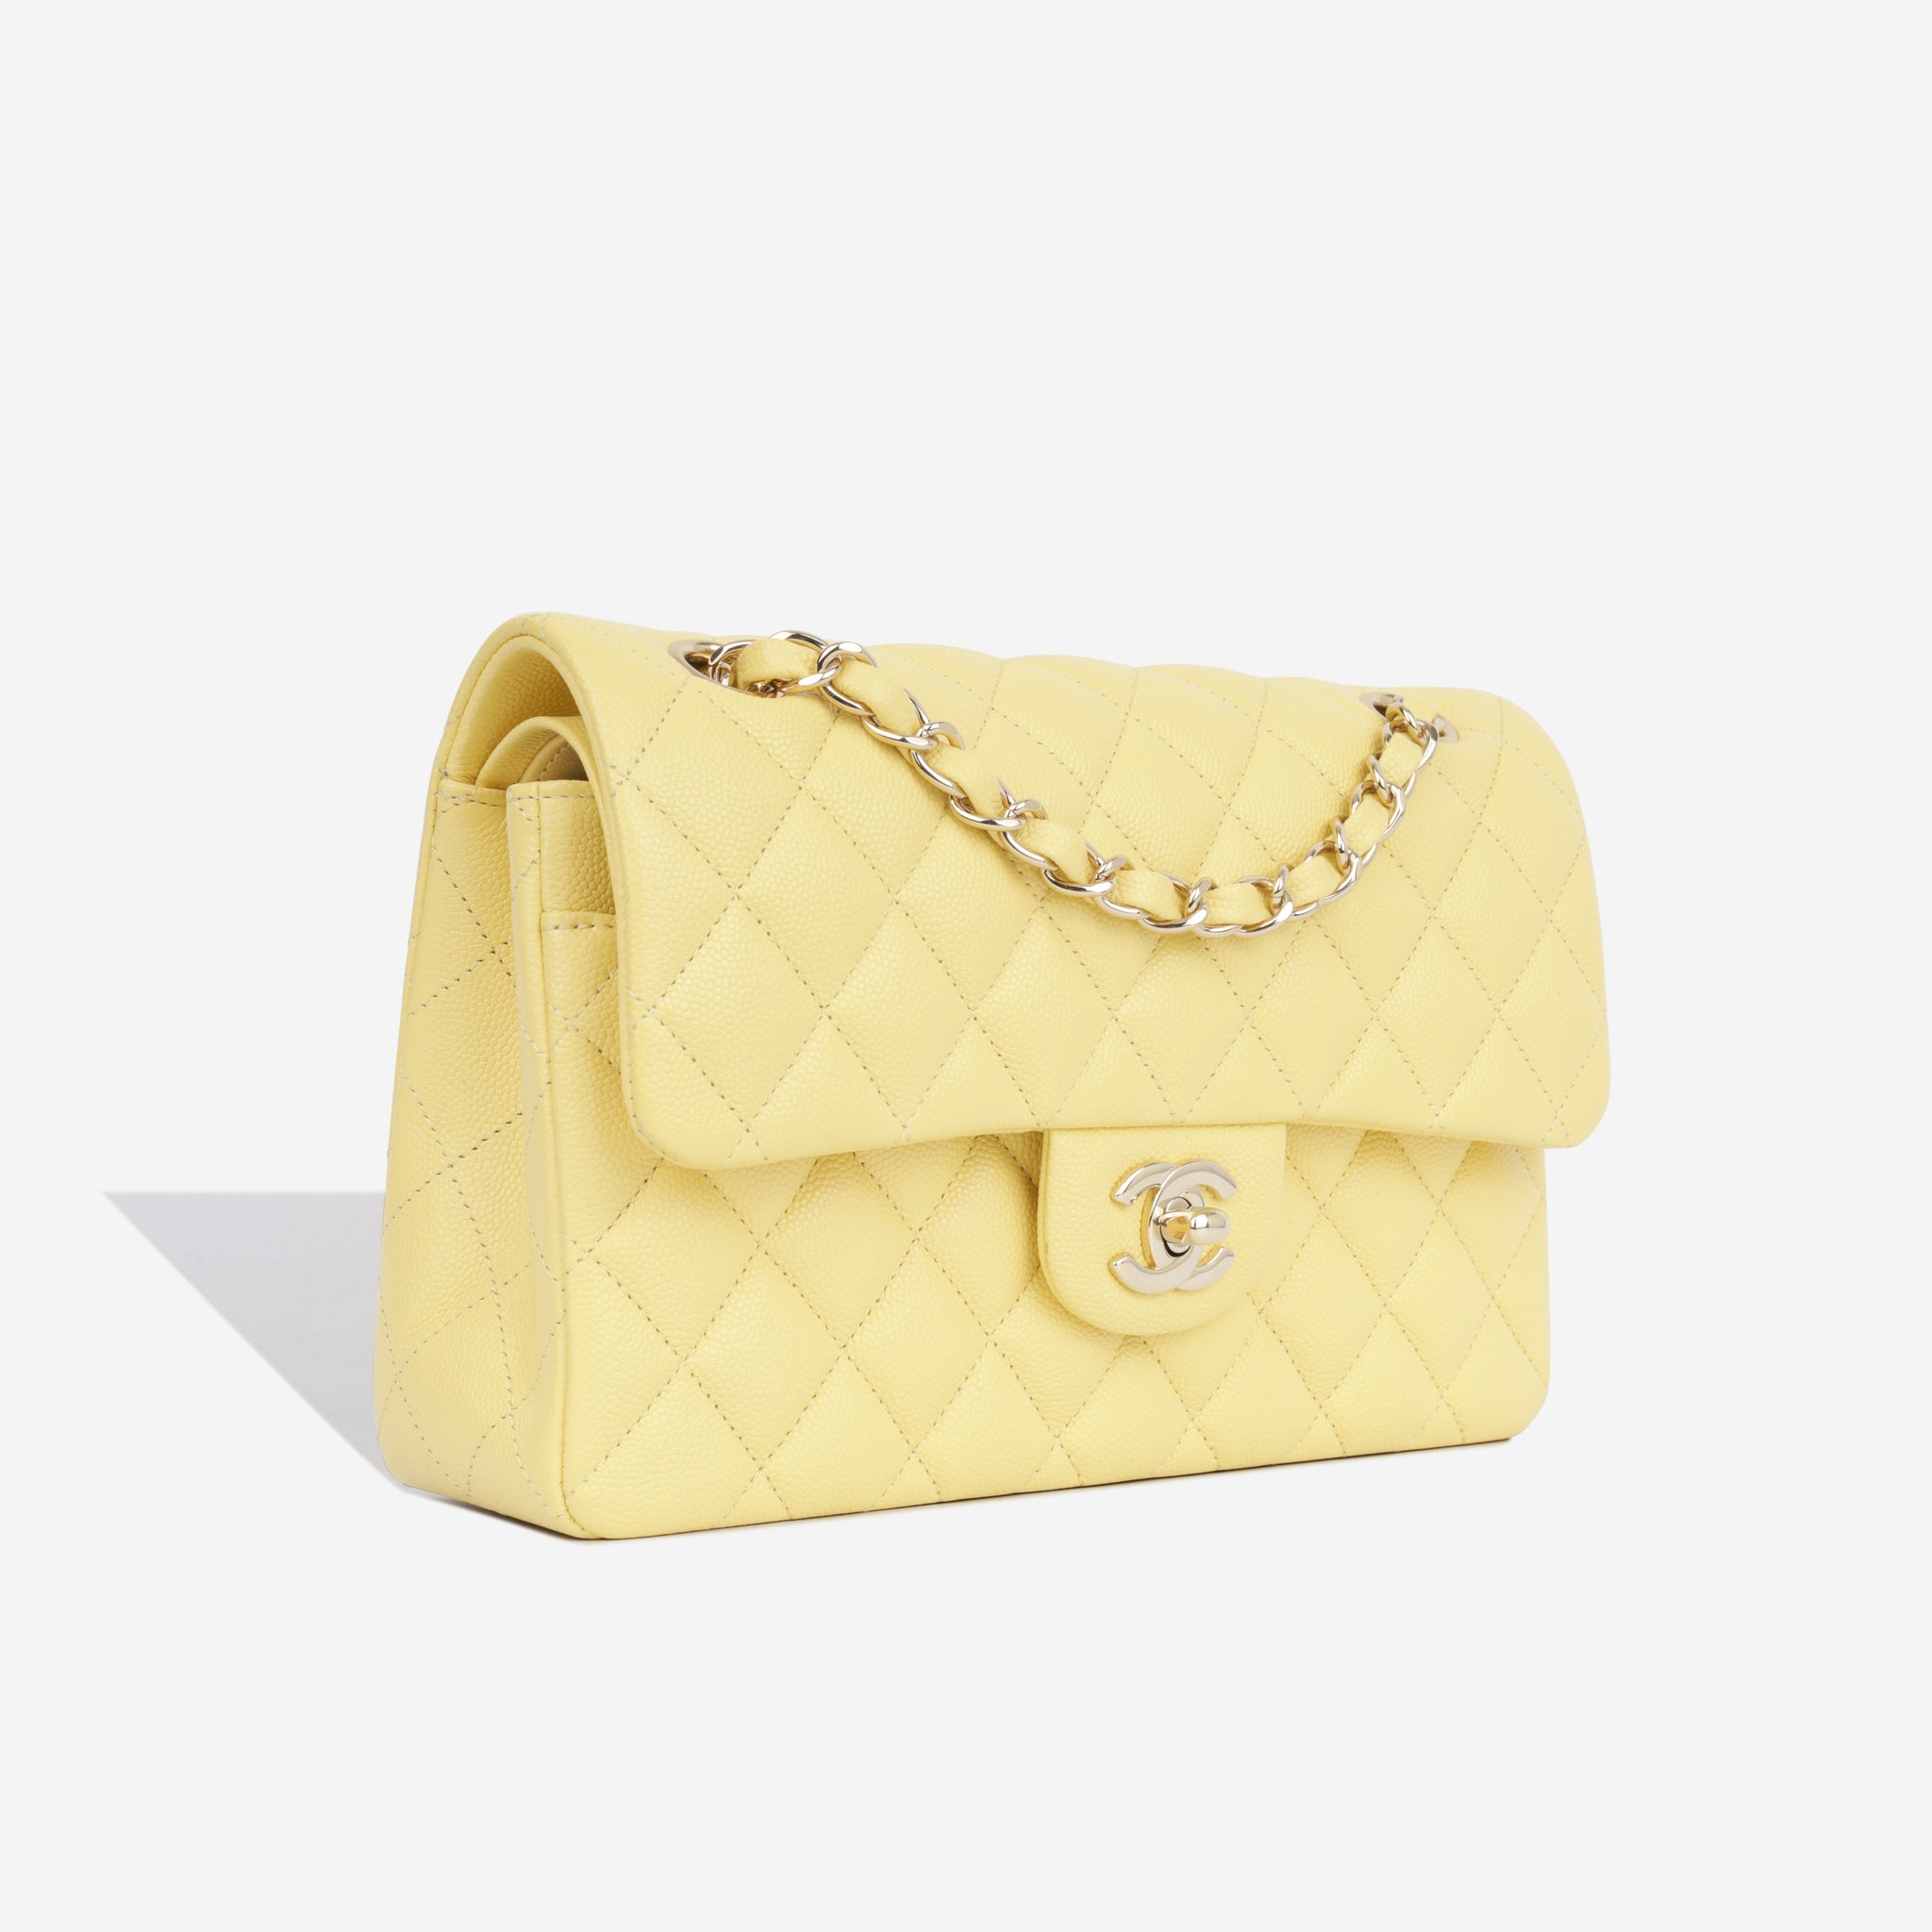 Classic handbag Patent calfskin  goldtone metal yellow  Fashion   CHANEL